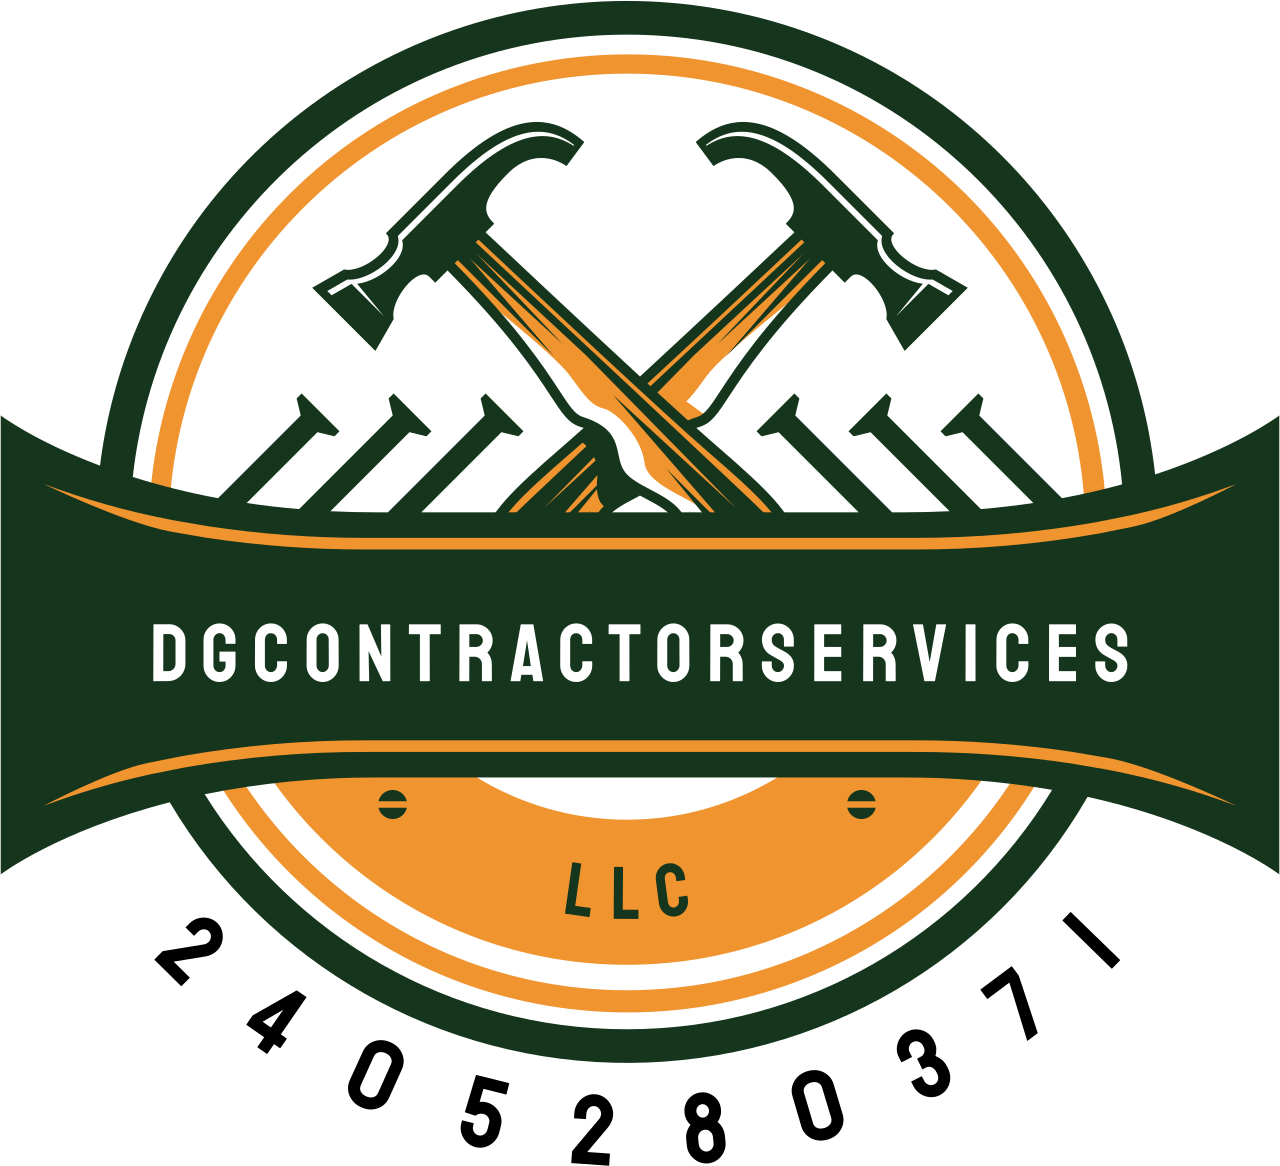 dgcontractorservices's logo